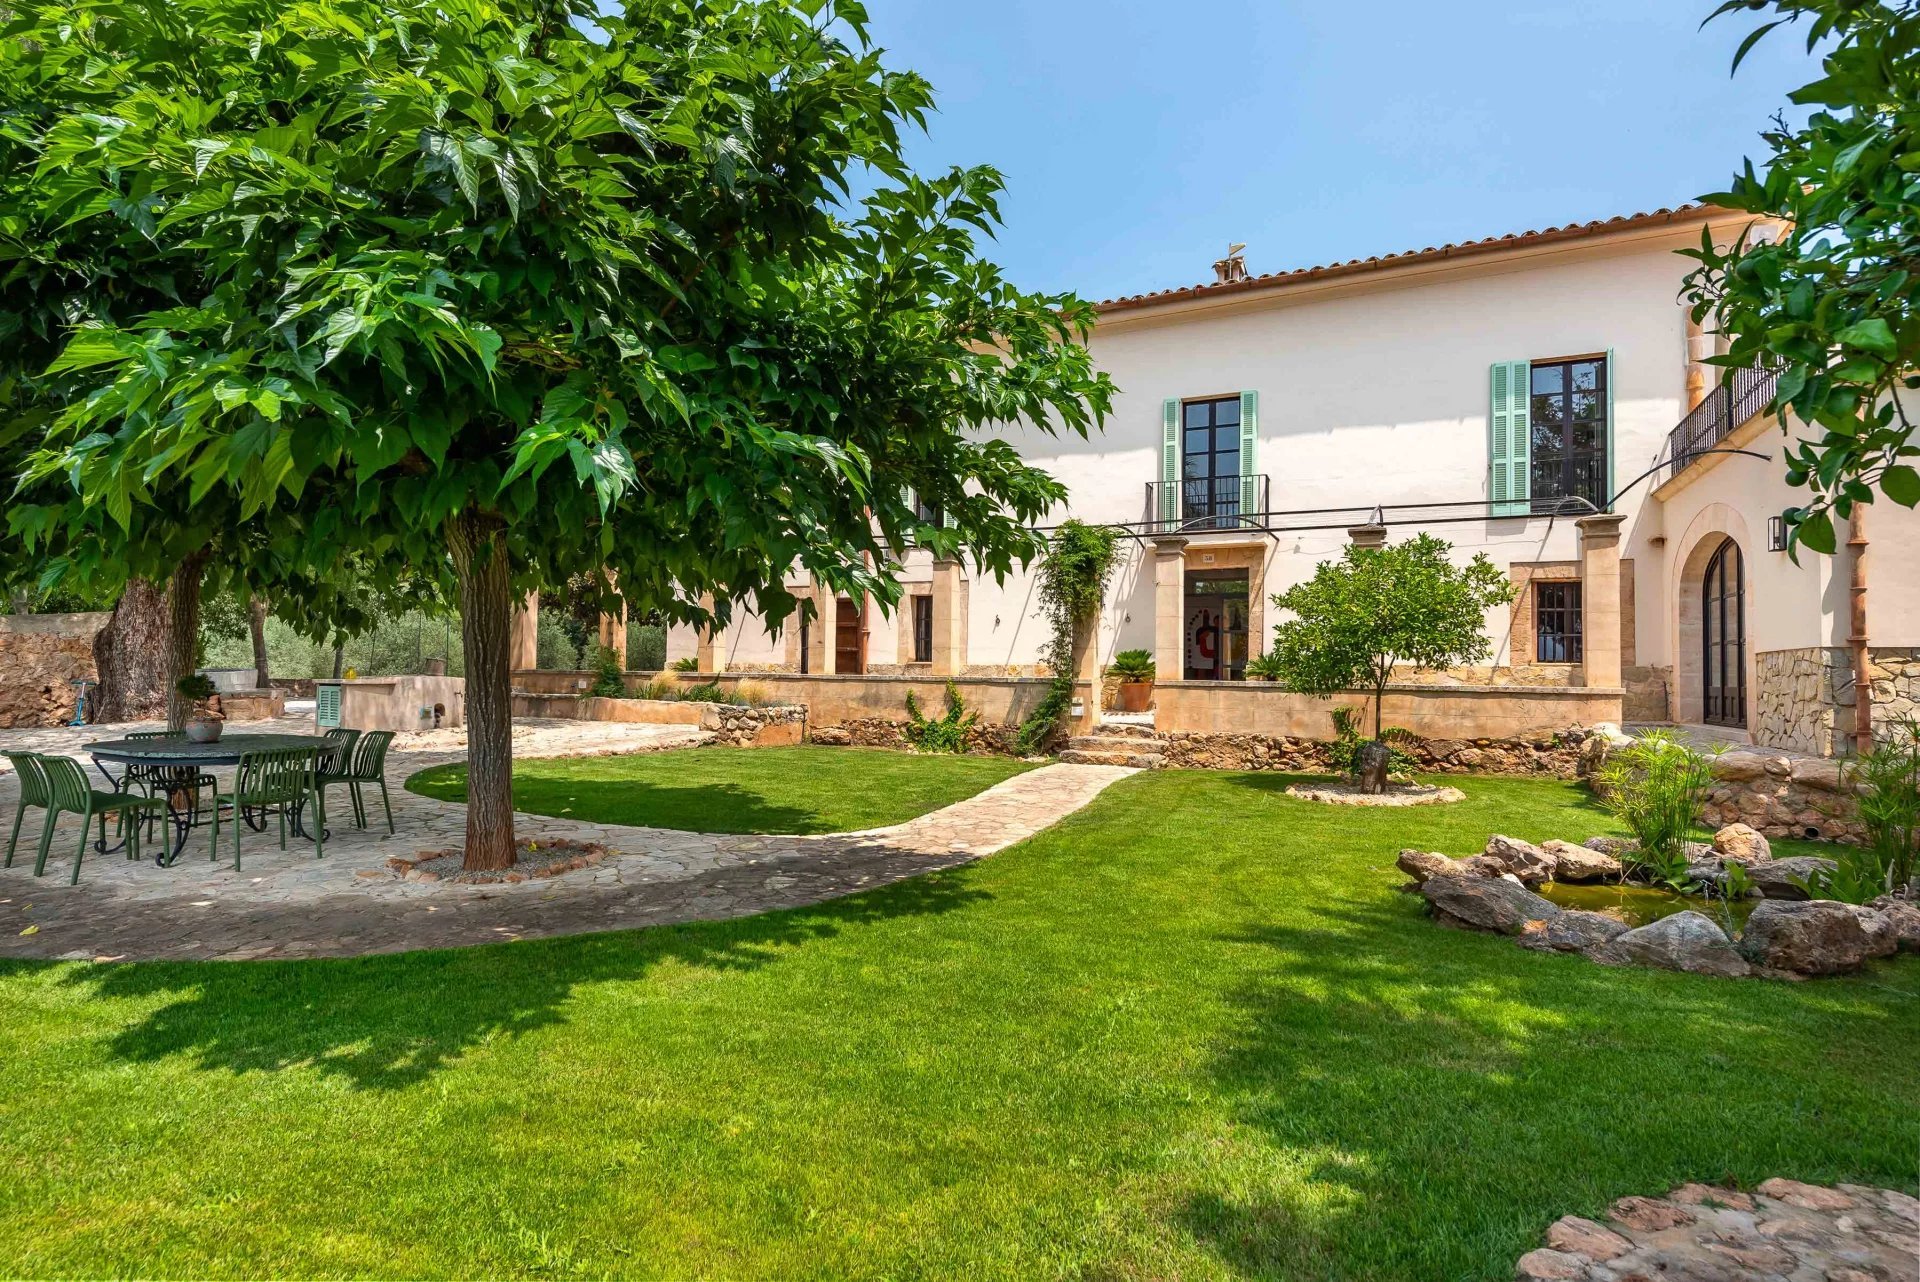 Francis York Bunyola Home Hunts Luxurious Country Estate in Mallorca, Spain 00020.jpeg